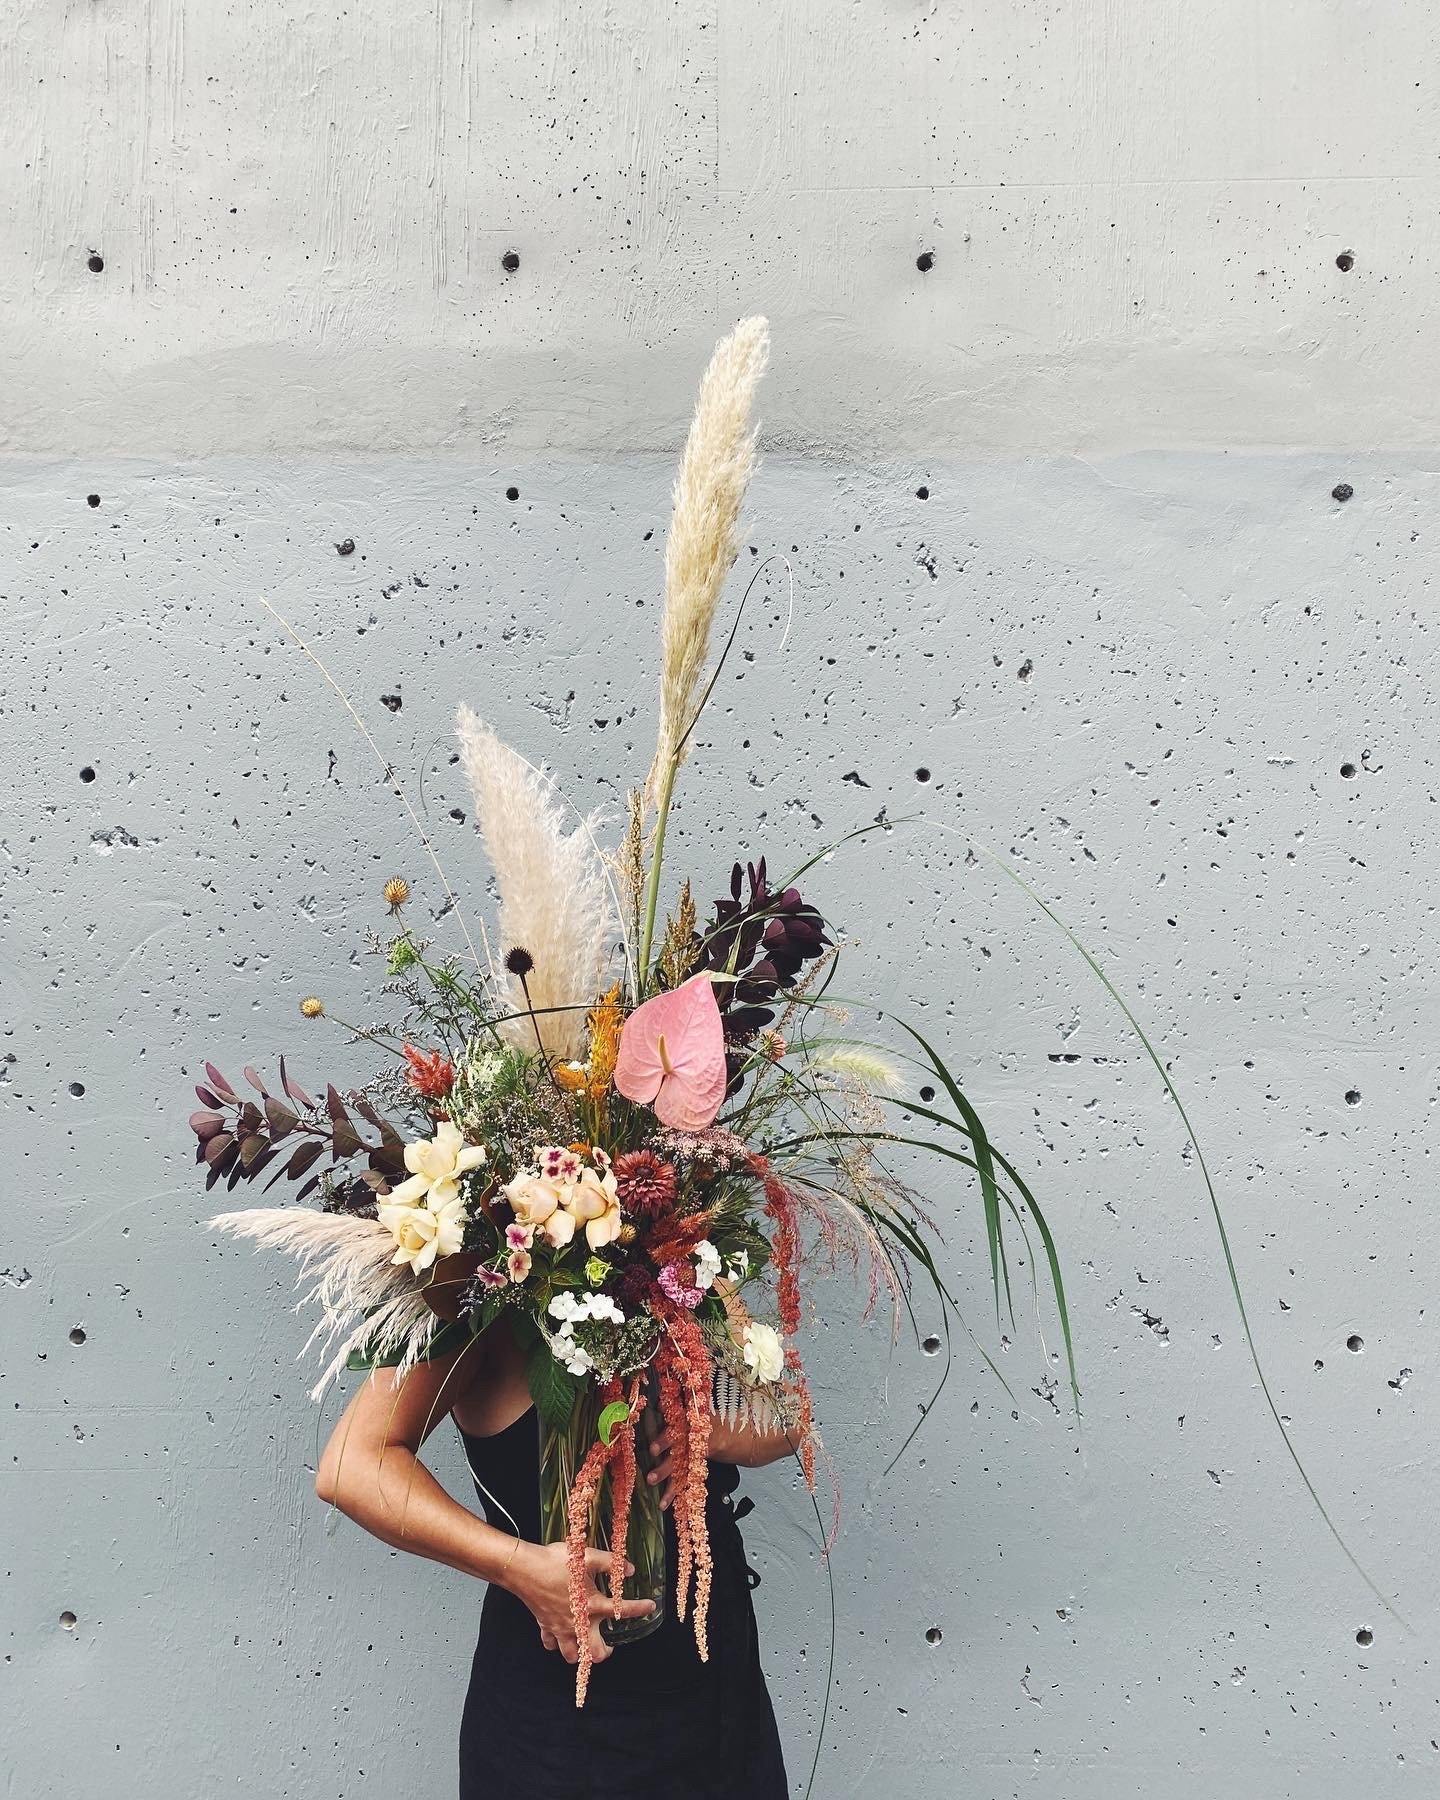 Arrangements - The Focal Arrangement - The Wild Bunch Florals - The Wild Bunch Florist - Vancouver Flower Shop Delivery